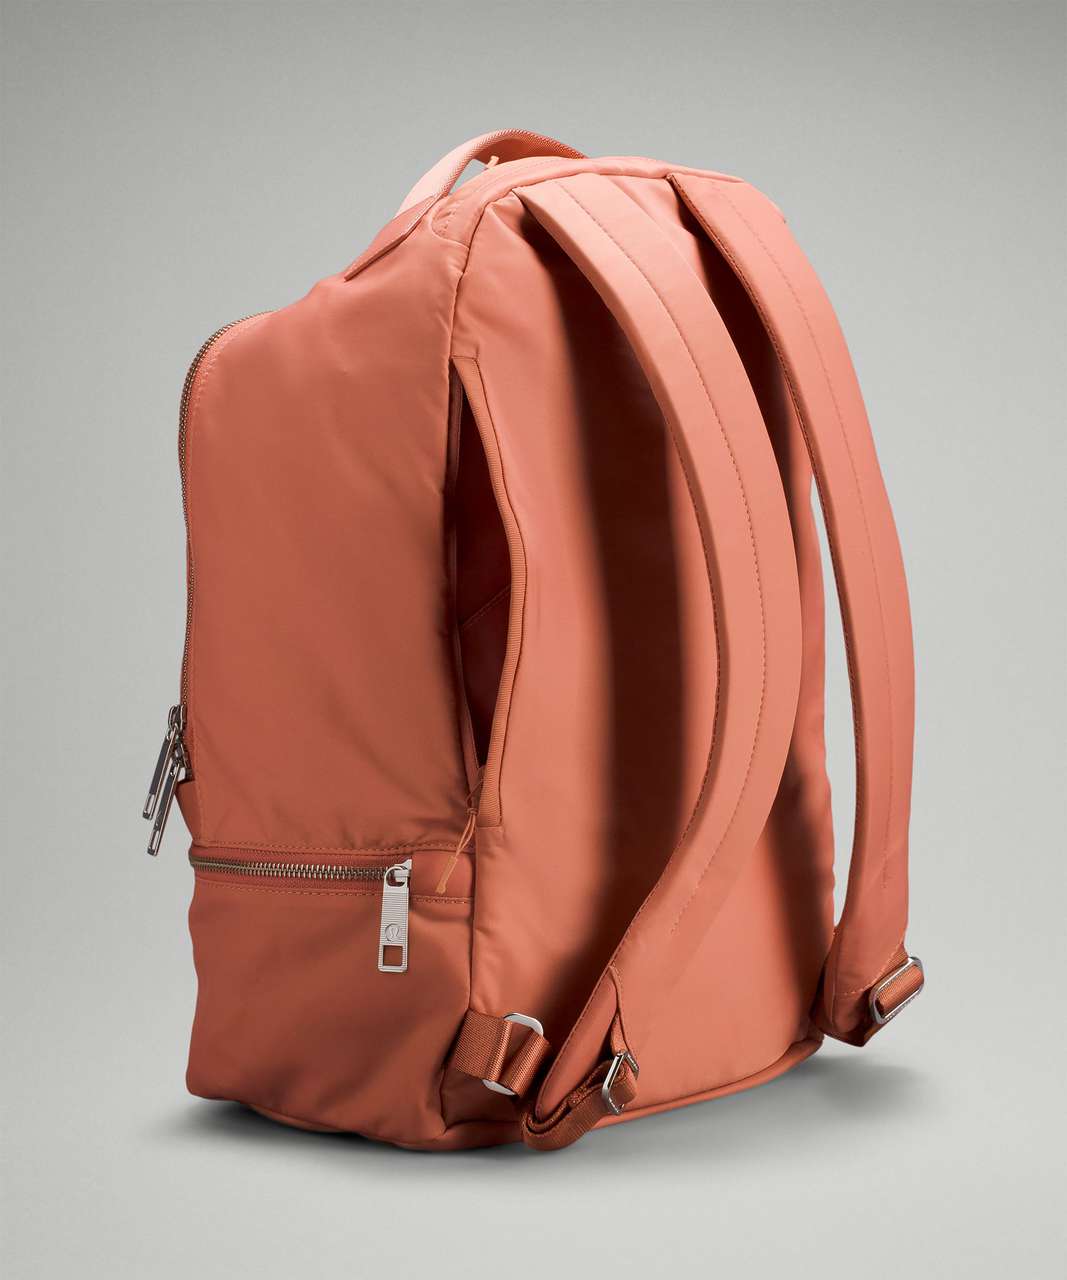 Lululemon City Adventurer Backpack 17L - Pink Savannah